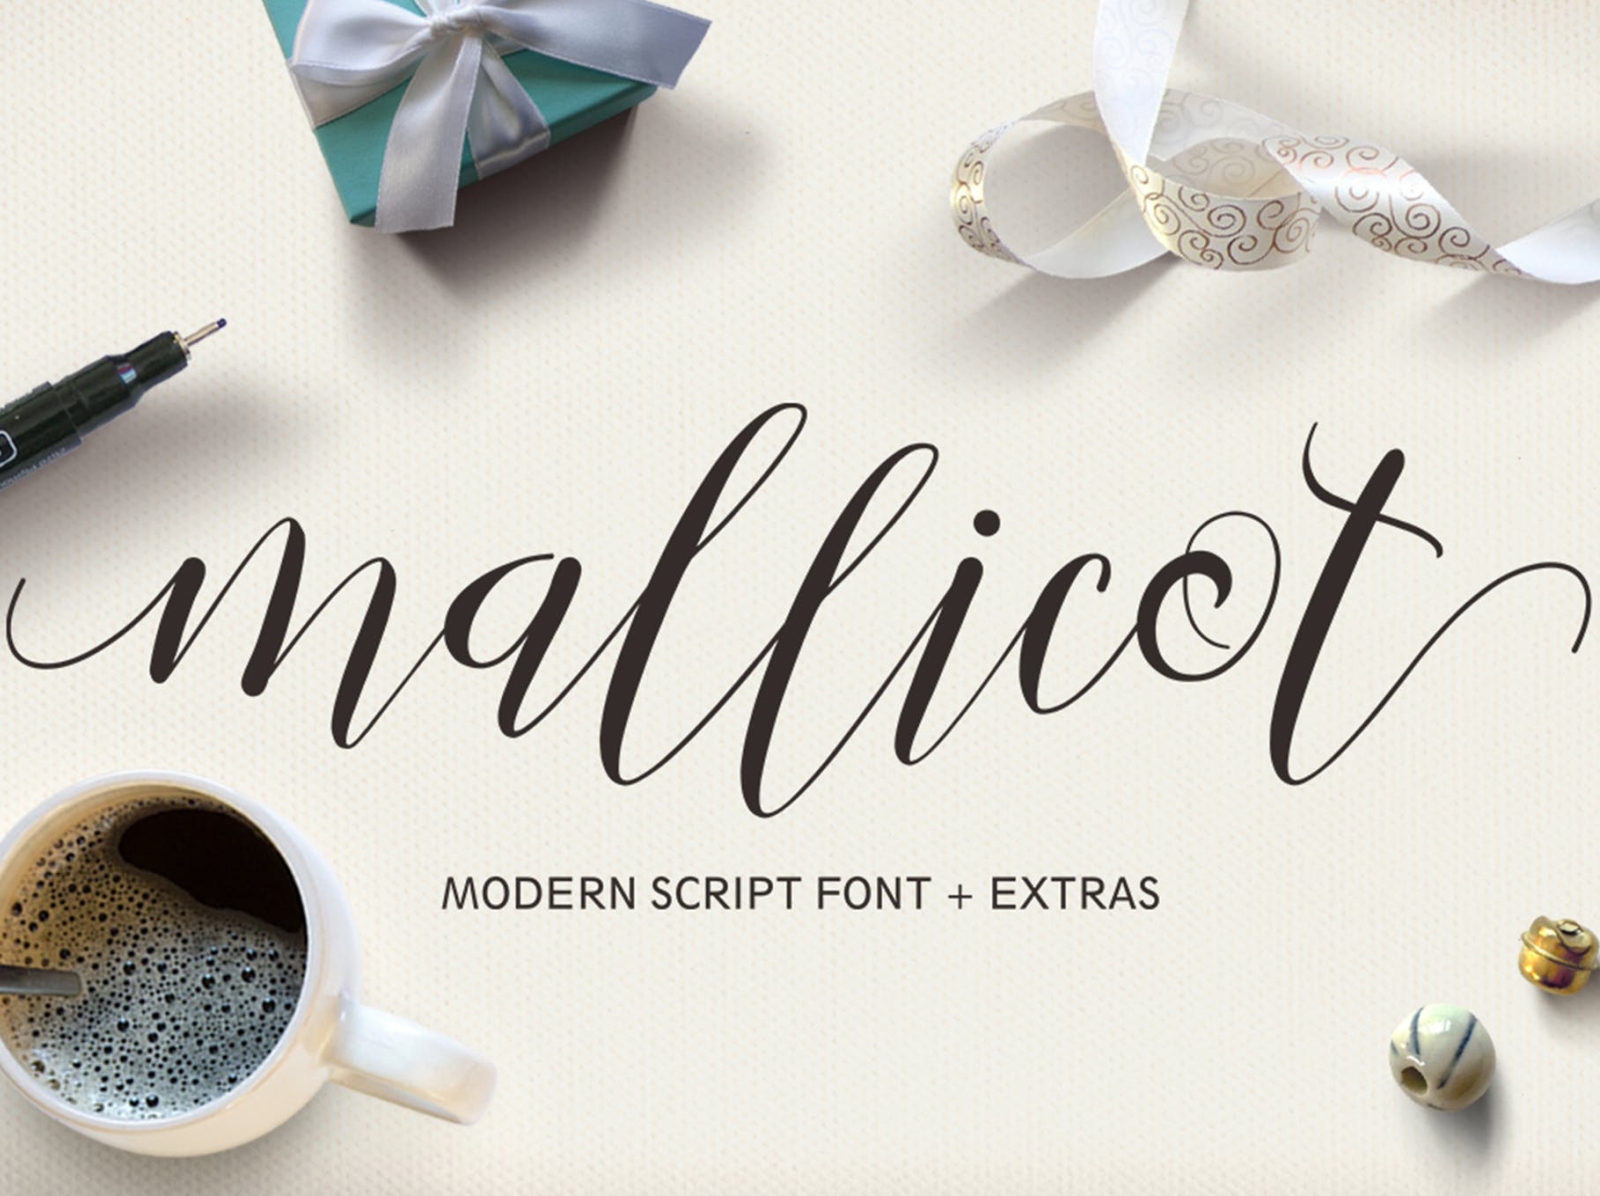 Mallicot Script Font